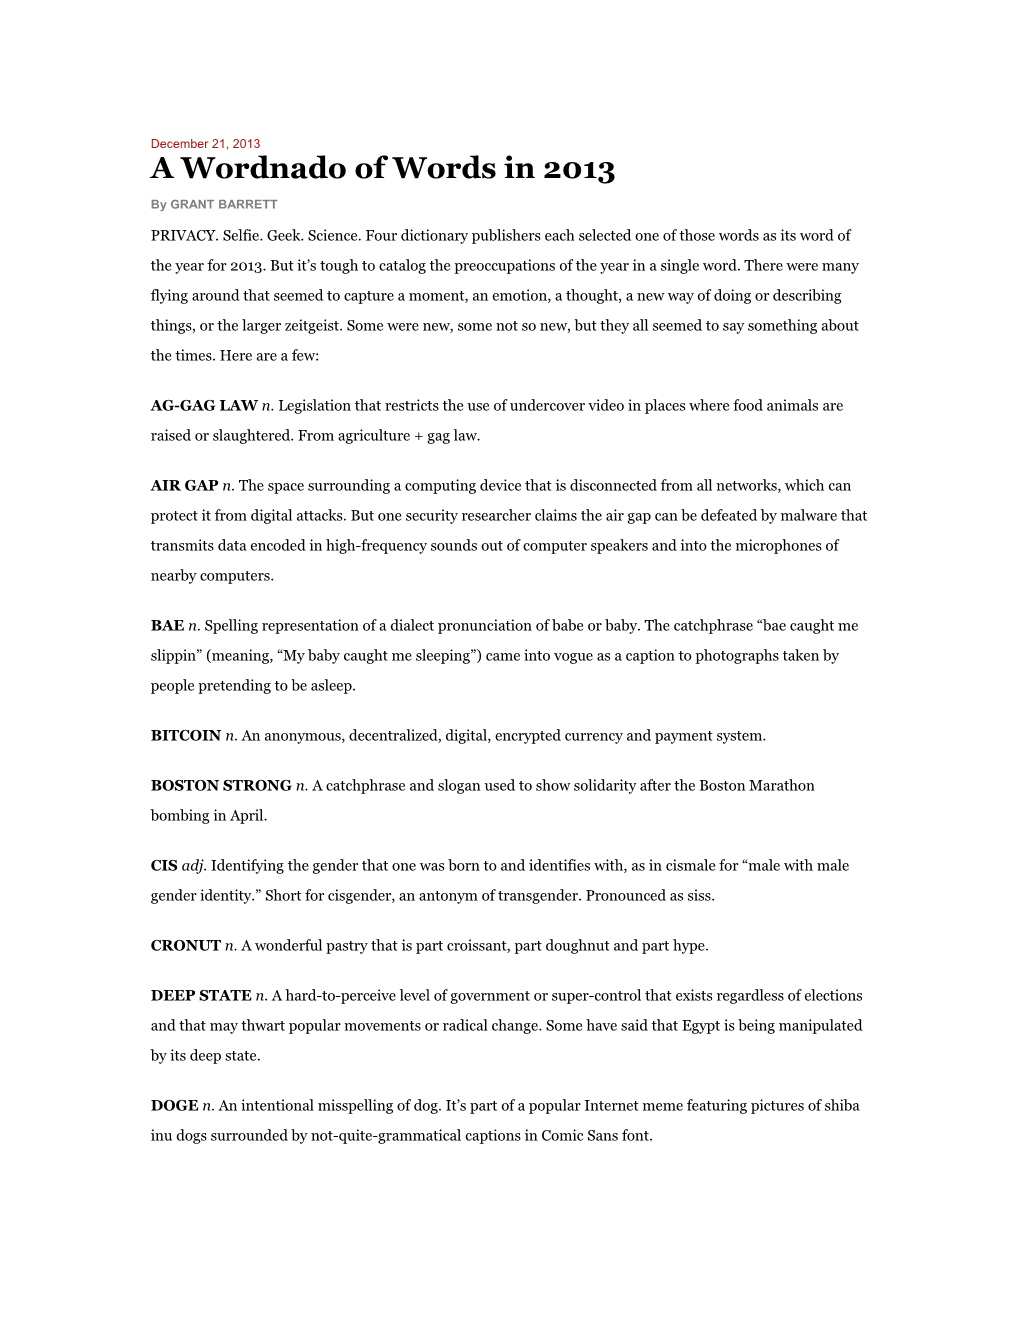 A Wordnado of Words in 2013